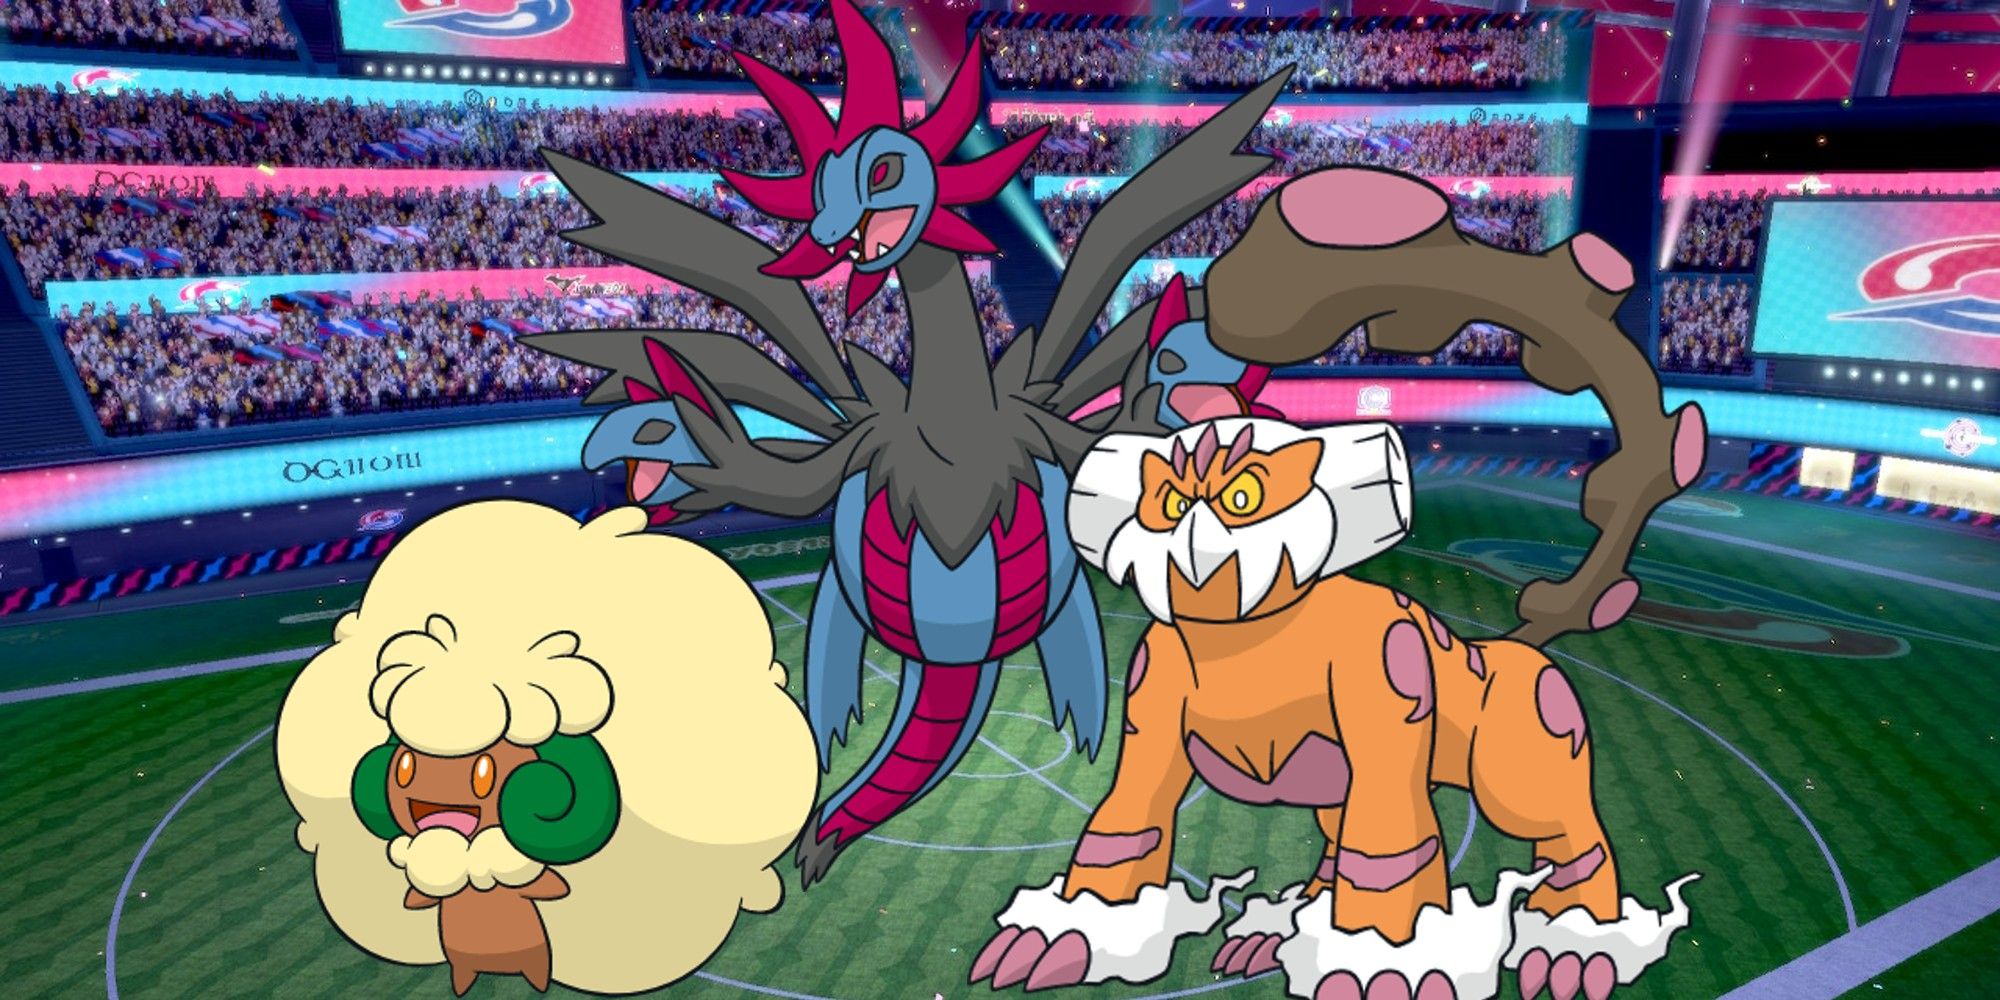 3 Pokemon standing together: Whimsicott, Hydreigon, and Landorus